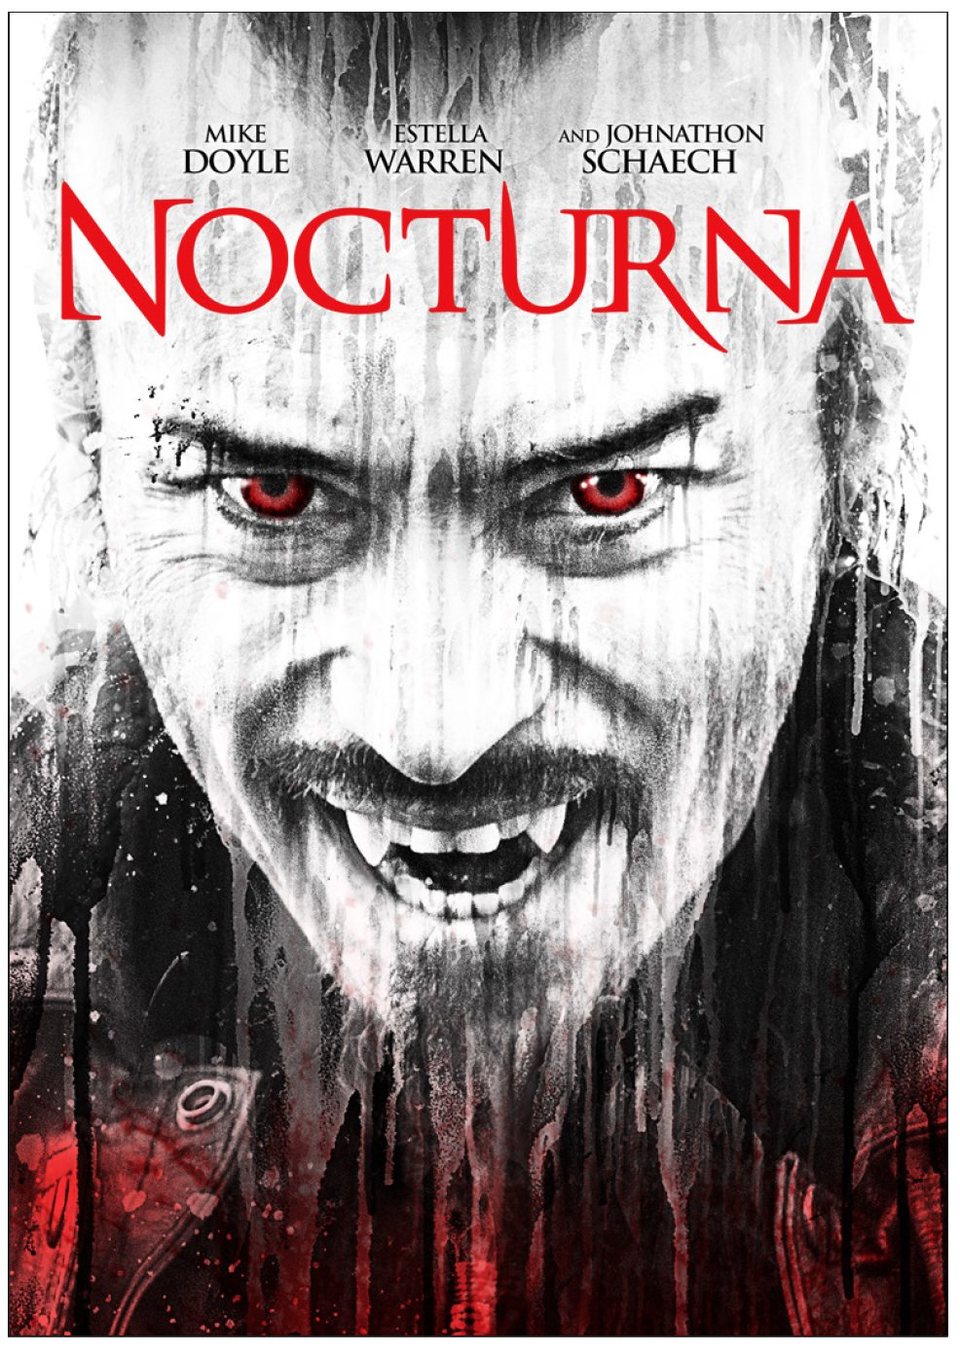 Cartel de Nocturna - Póster 'Nocturna'